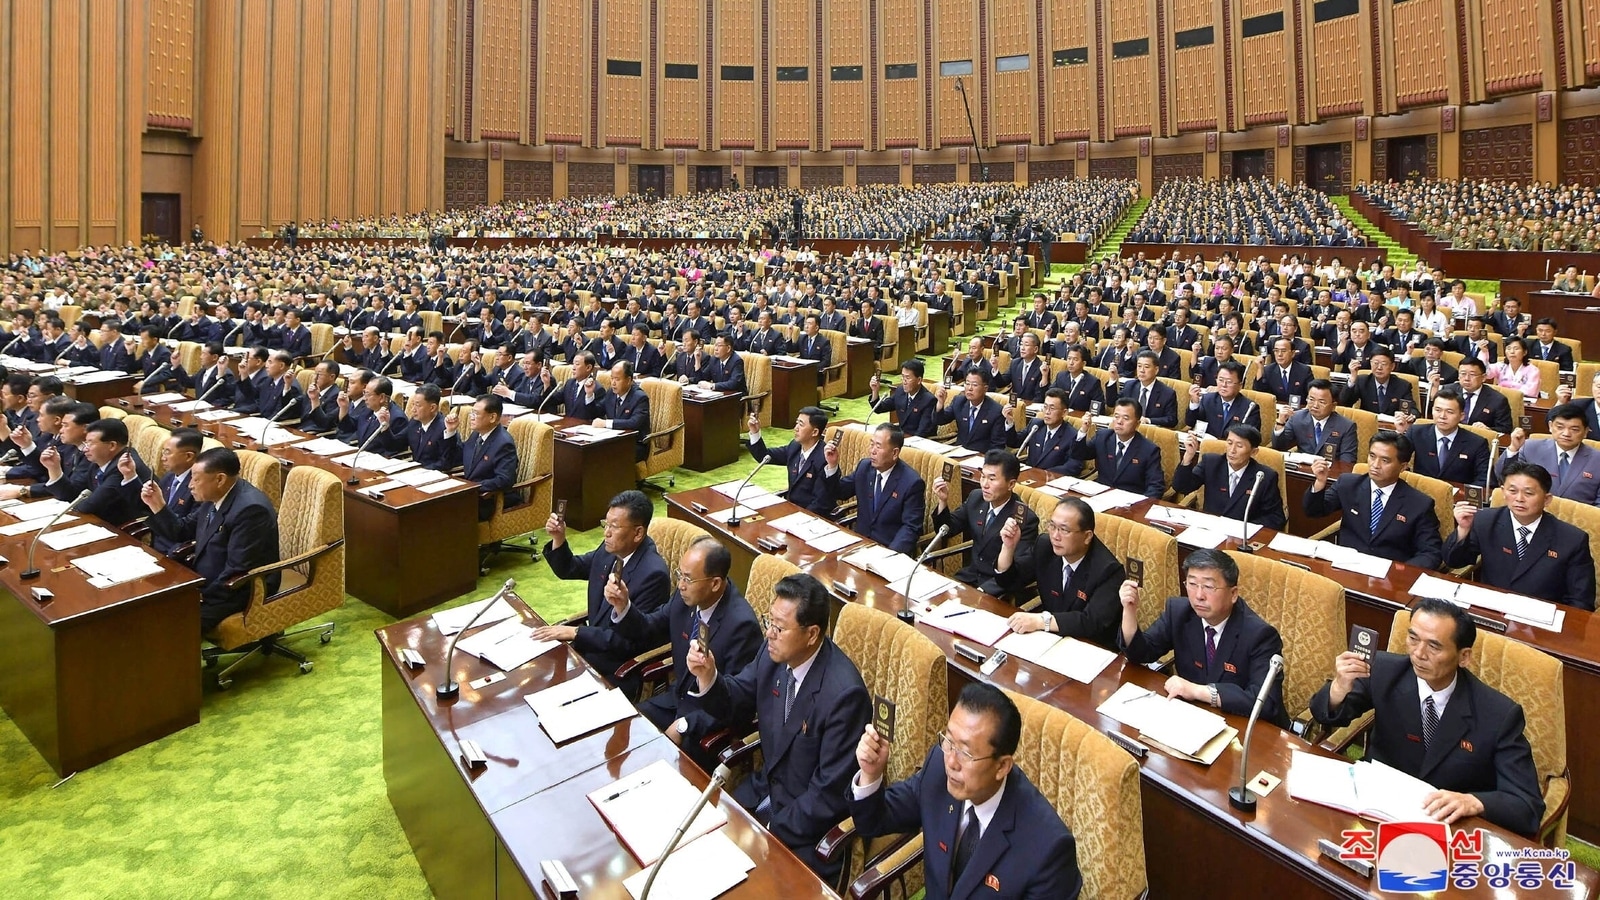 N.Korea's parliament adopts laws in effort to build 'socialist